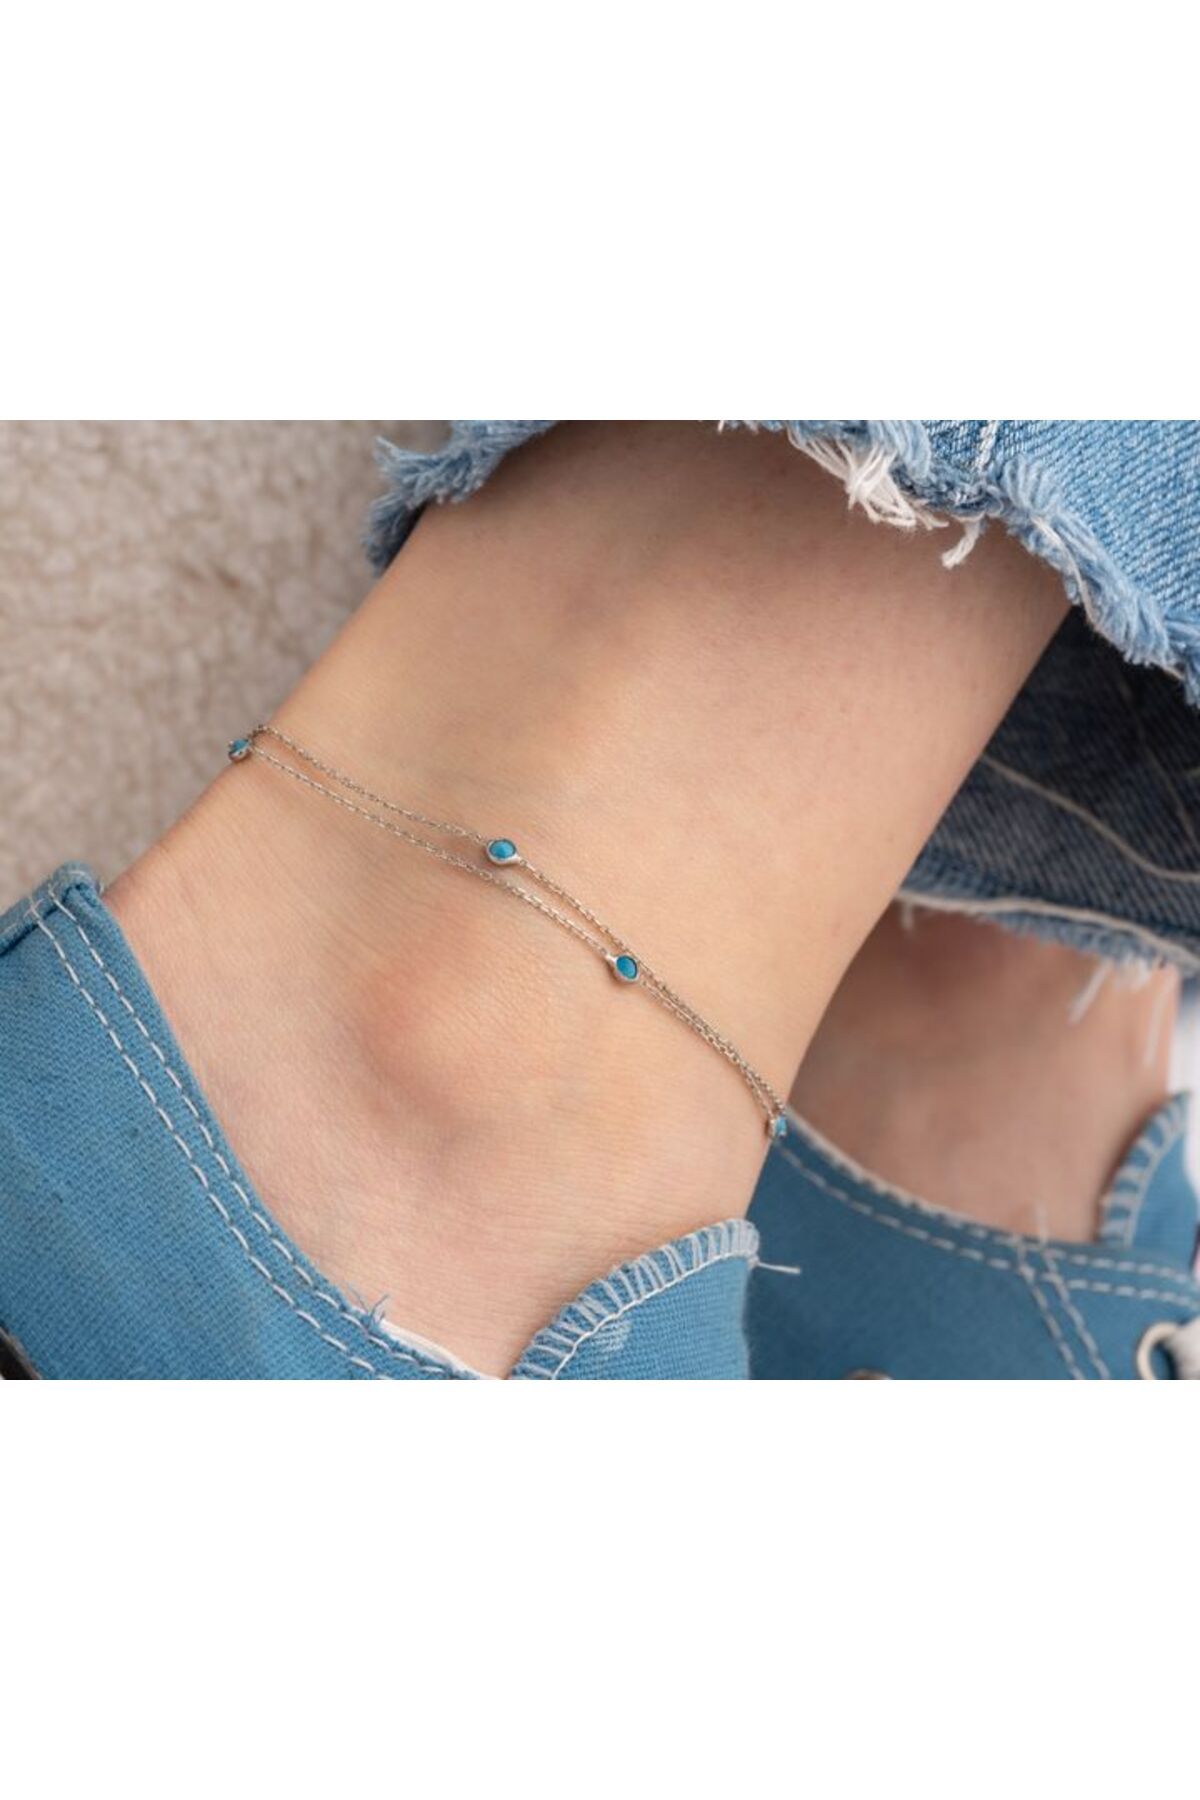 ANGORA GÜMÜŞ Blue Stone Anklet: Captivating Azure Charm on Your Ankle